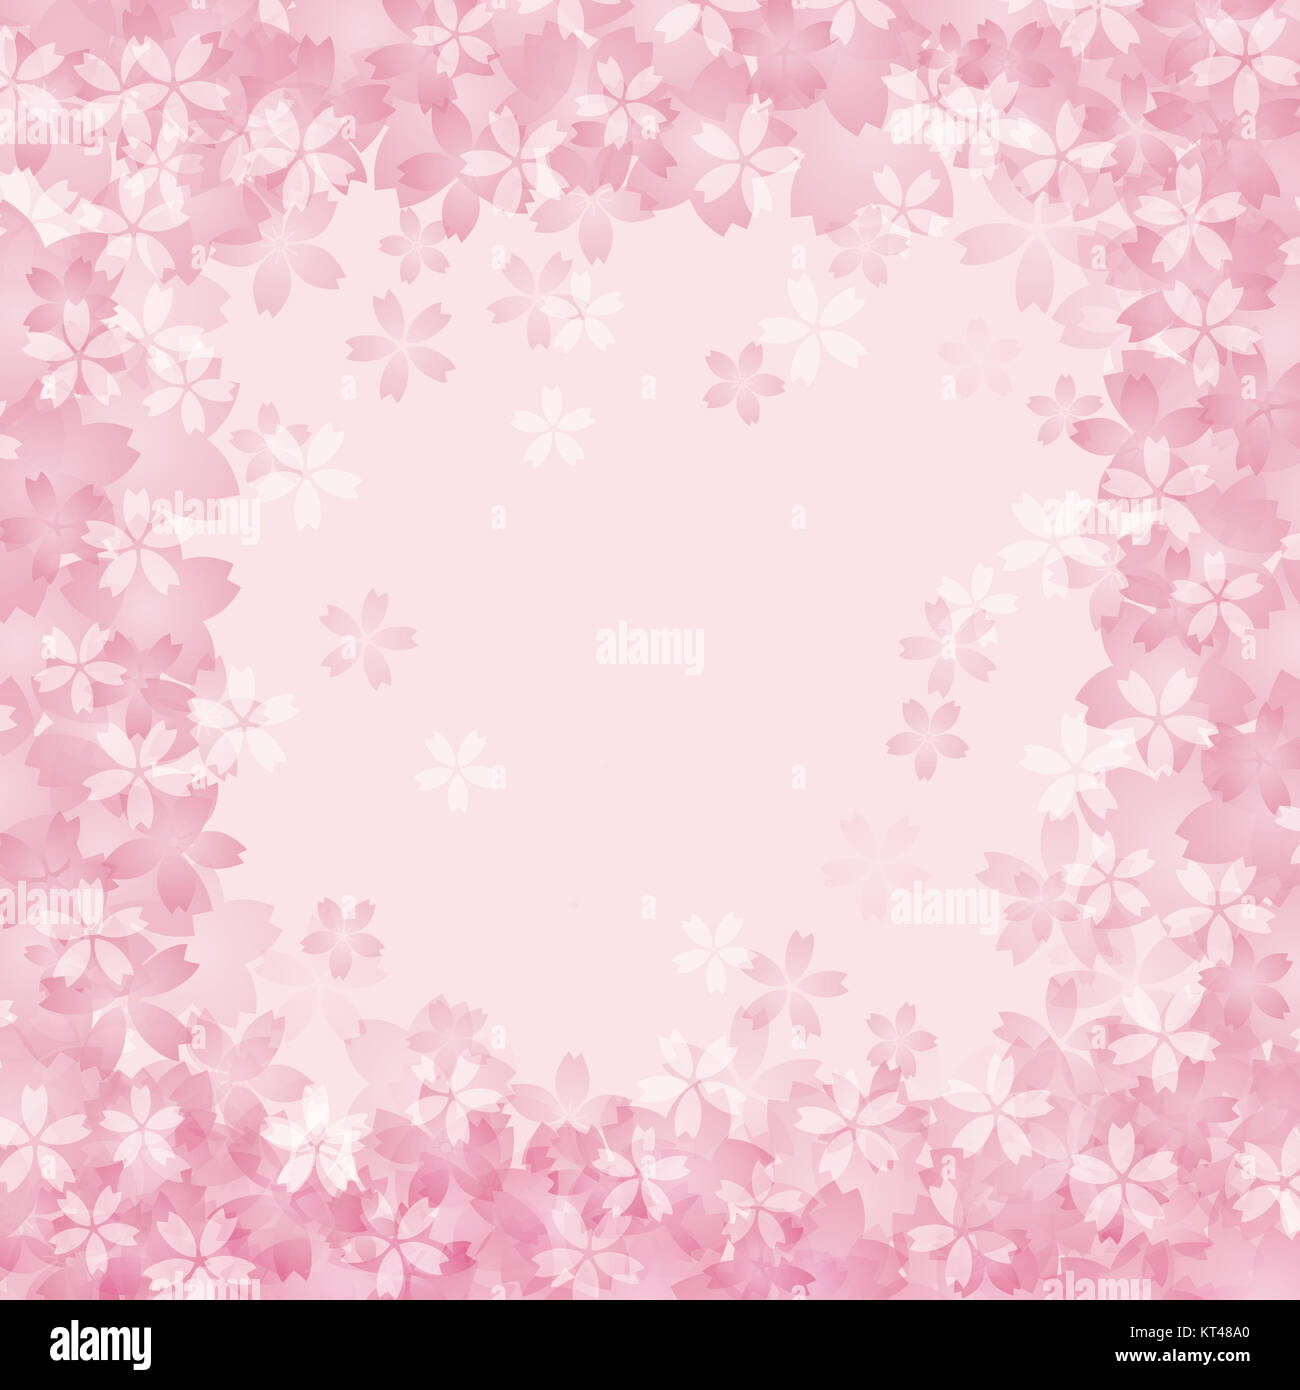 Cherry blossom background image Stock Photo